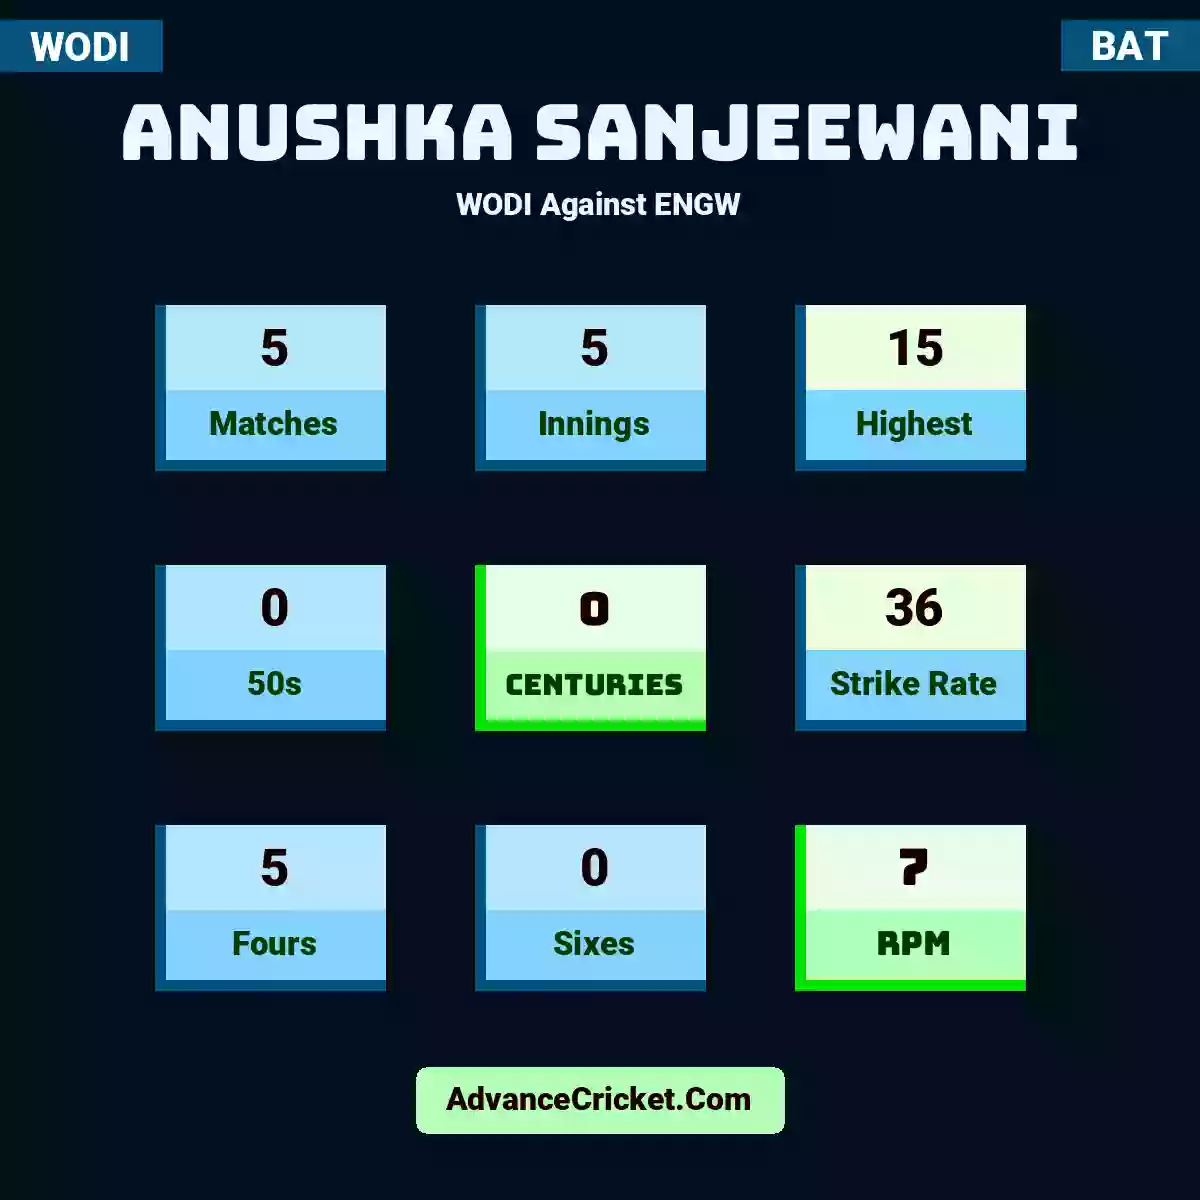 Anushka Sanjeewani WODI  Against ENGW, Anushka Sanjeewani played 5 matches, scored 15 runs as highest, 0 half-centuries, and 0 centuries, with a strike rate of 36. A.Sanjeewani hit 5 fours and 0 sixes, with an RPM of 7.